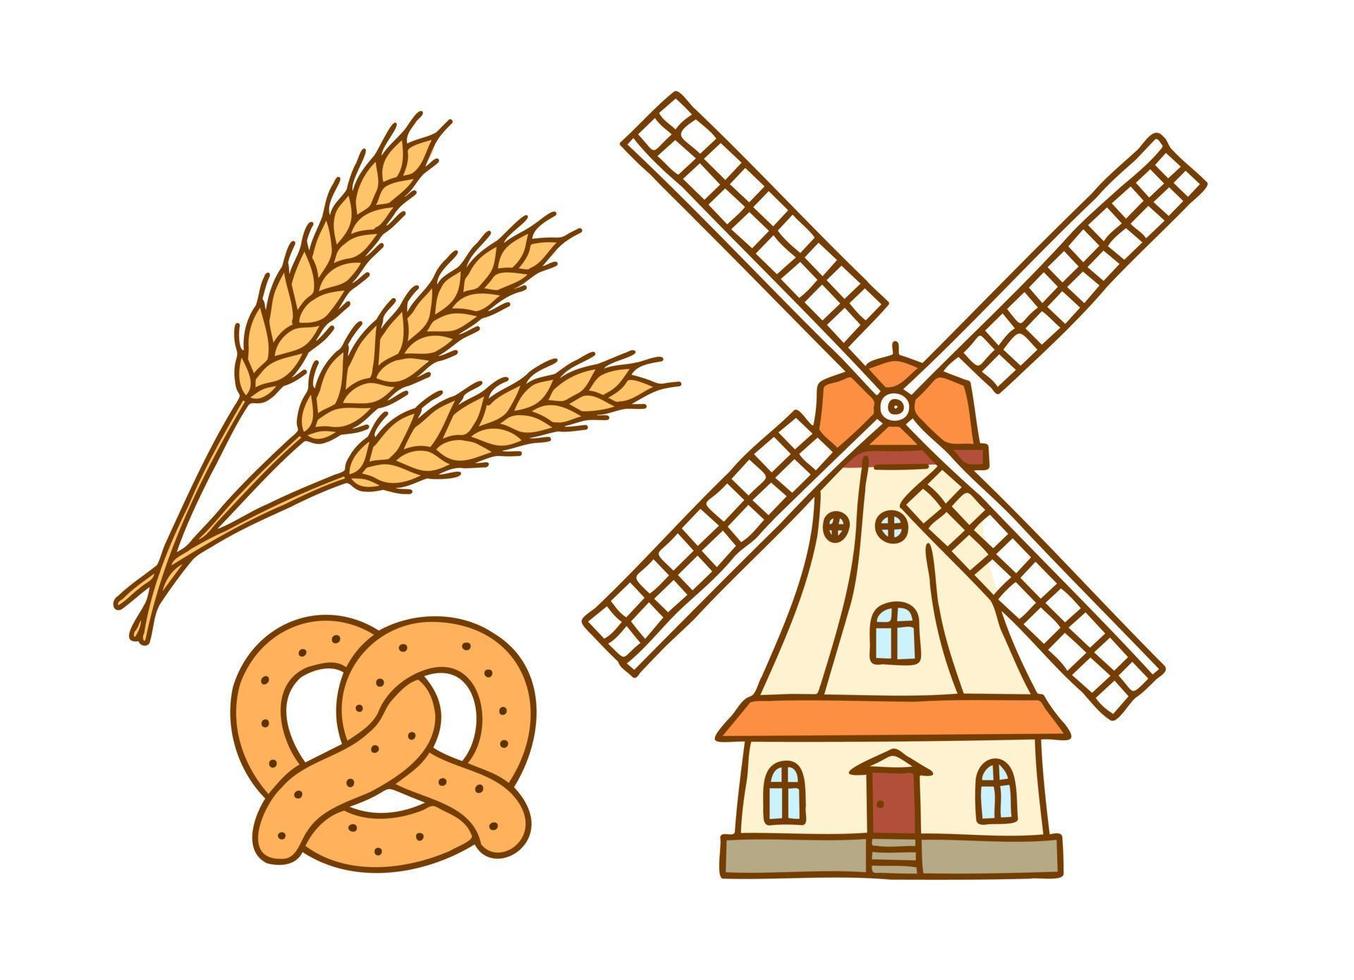 Baking bread. Mill, bread, wheat. Vector hand draw set of illustrations